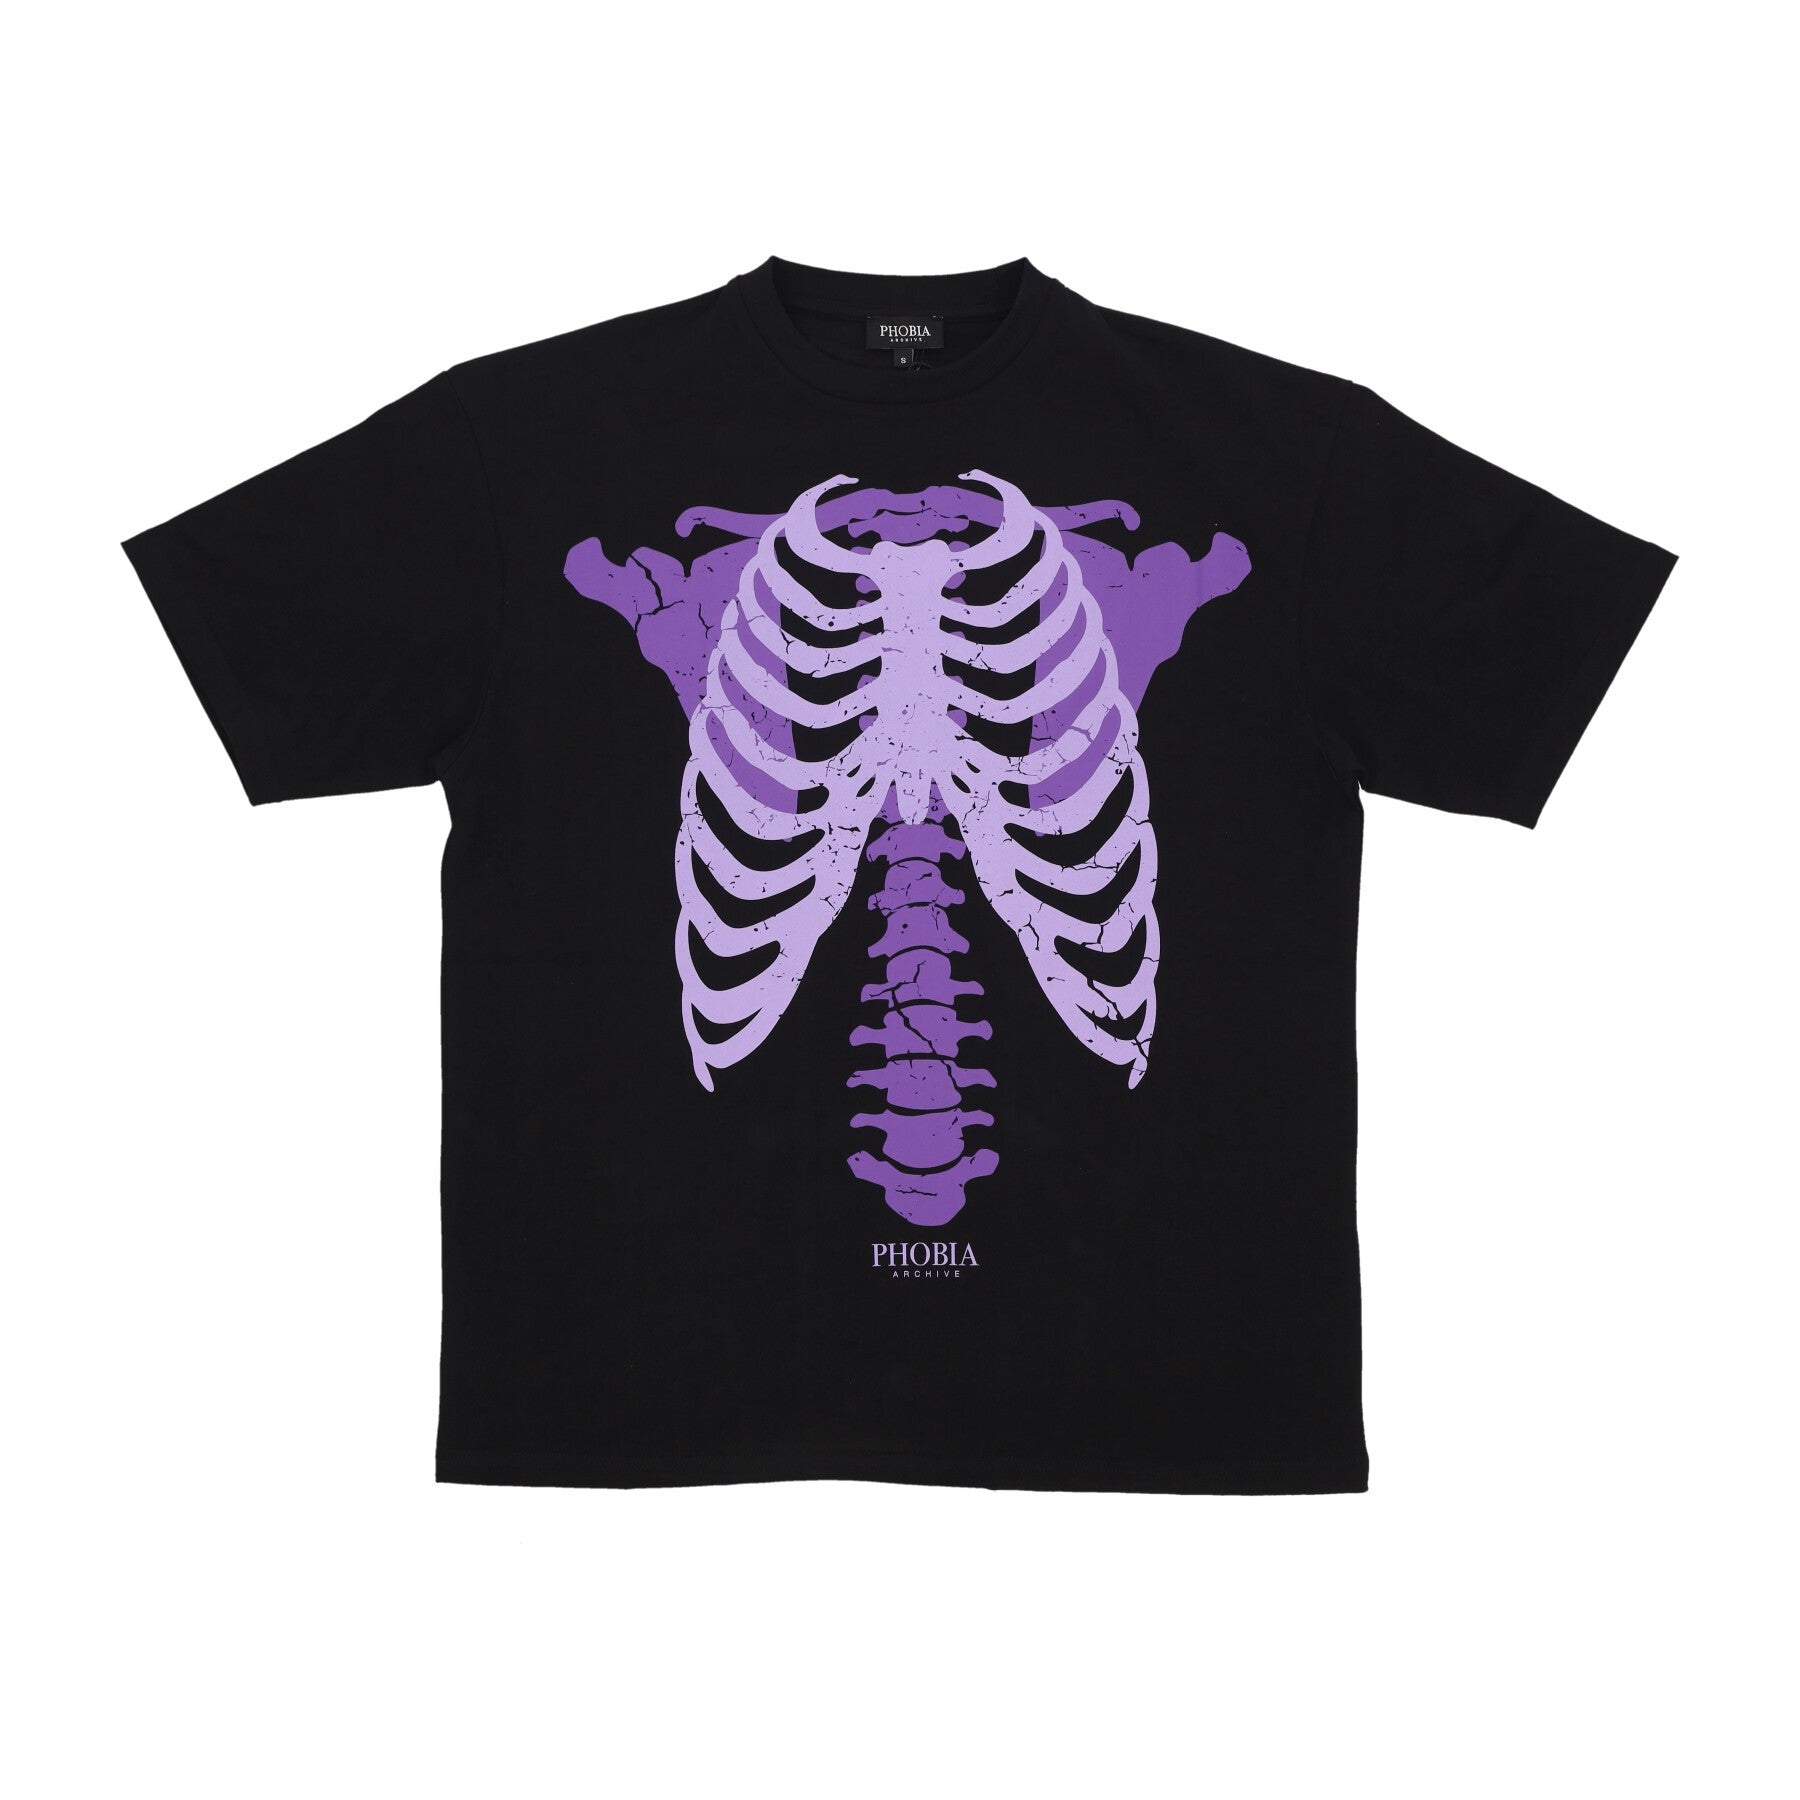 Men's Skeleton Print Tee T-Shirt Black/purple